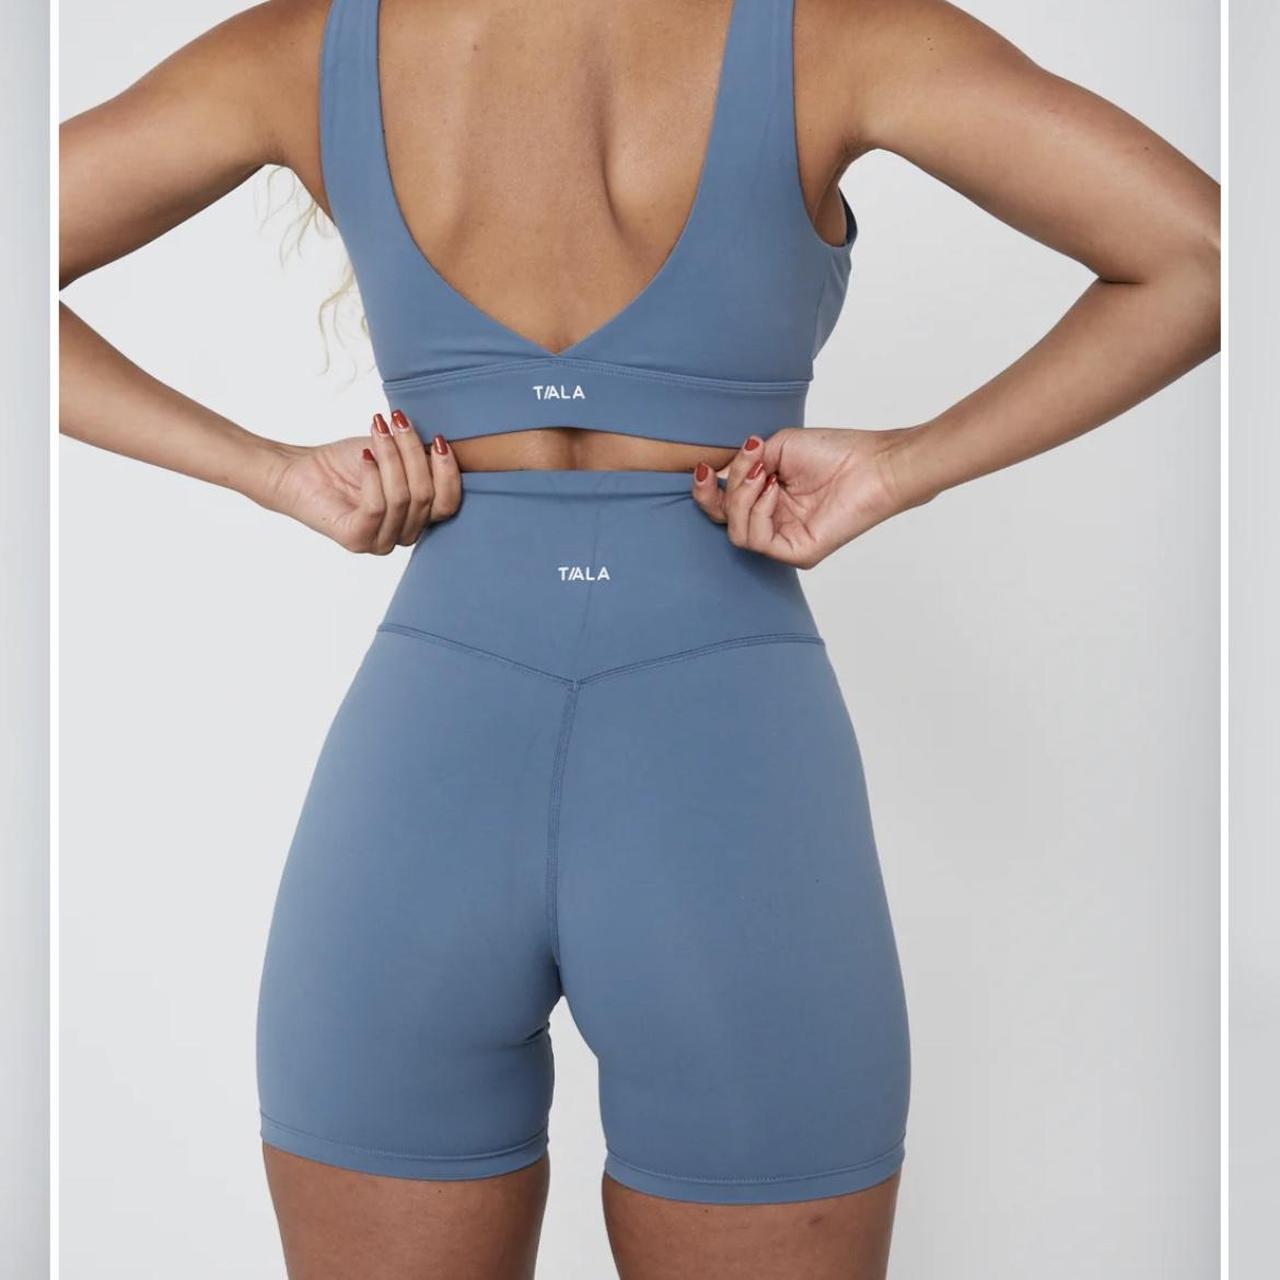 Tala Dayflex shorts Colour: blue - looks like the - Depop